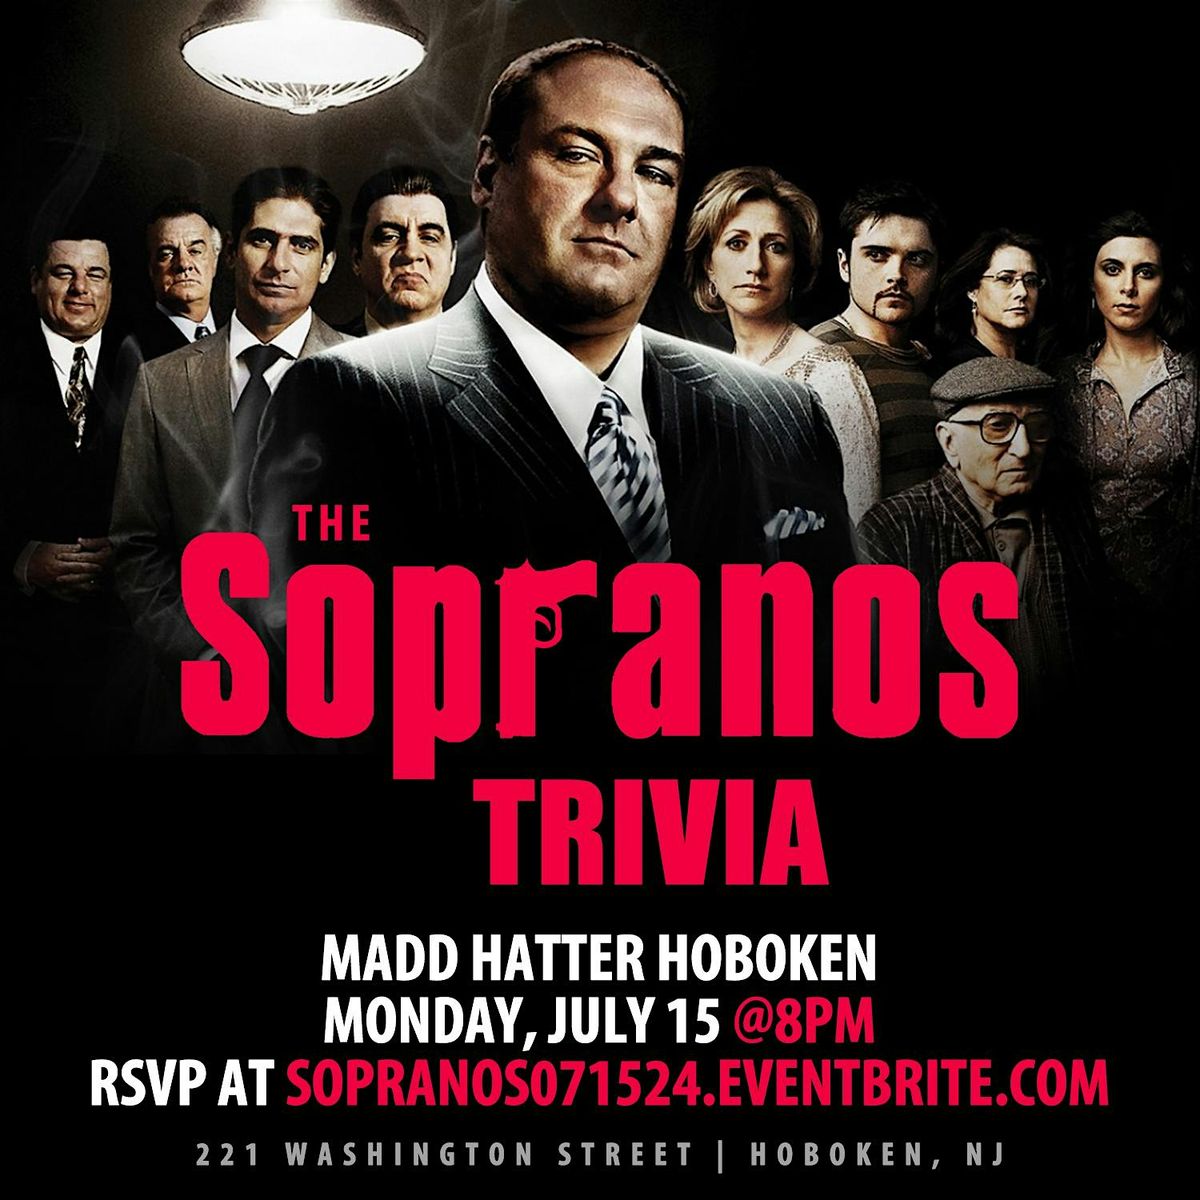 The Sopranos Trivia